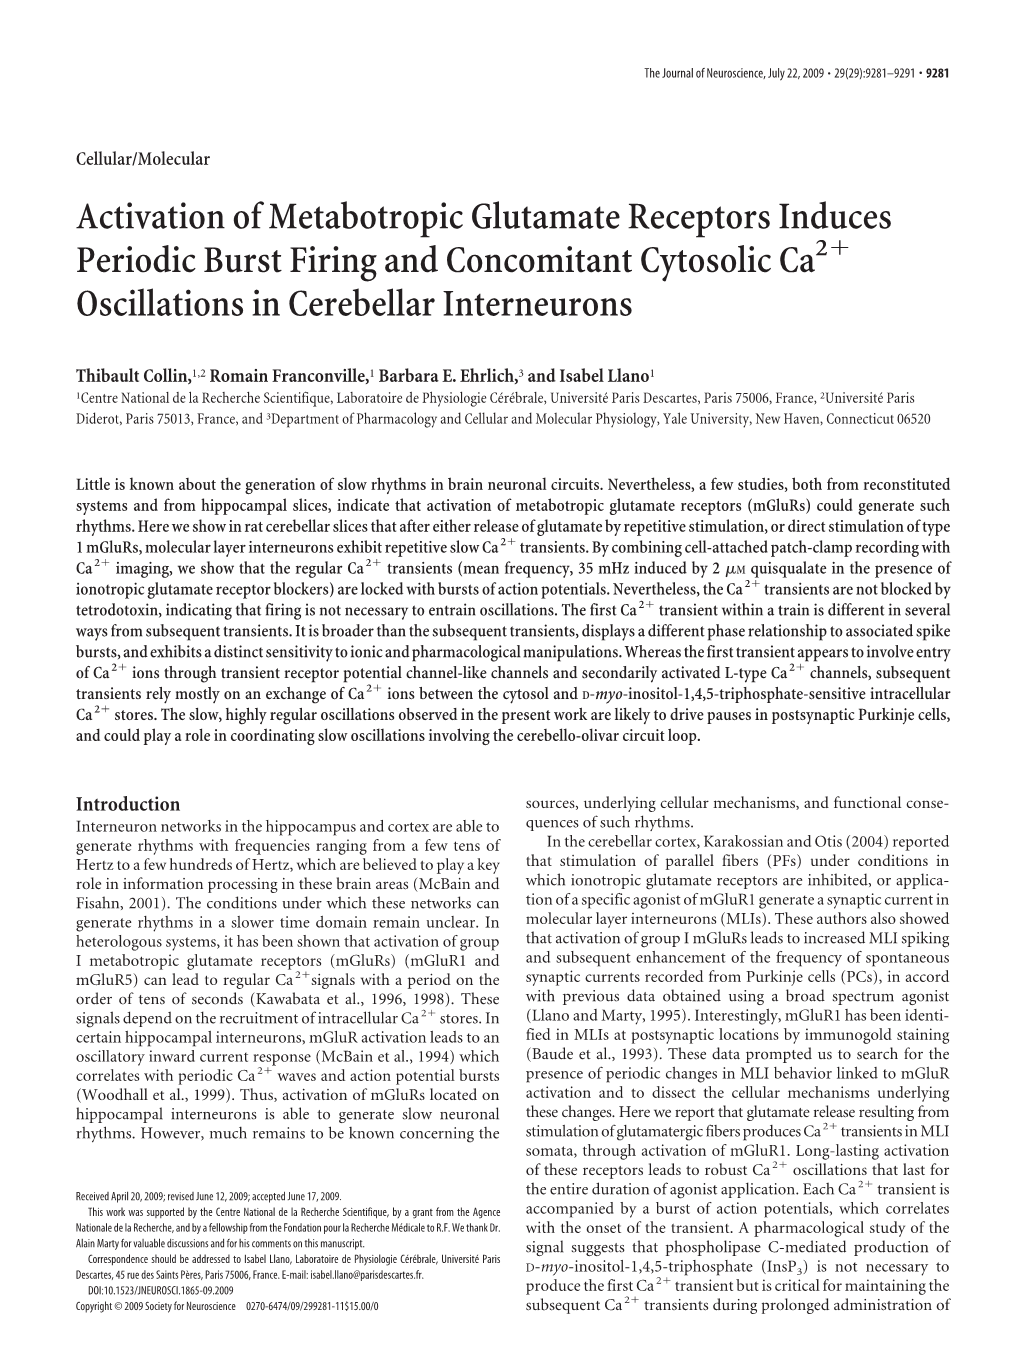 Activation of Metabotropic Glutamate Receptors Induces Periodic Burst Firing and Concomitant Cytosolic Ca2ϩ Oscillations in Cerebellar Interneurons